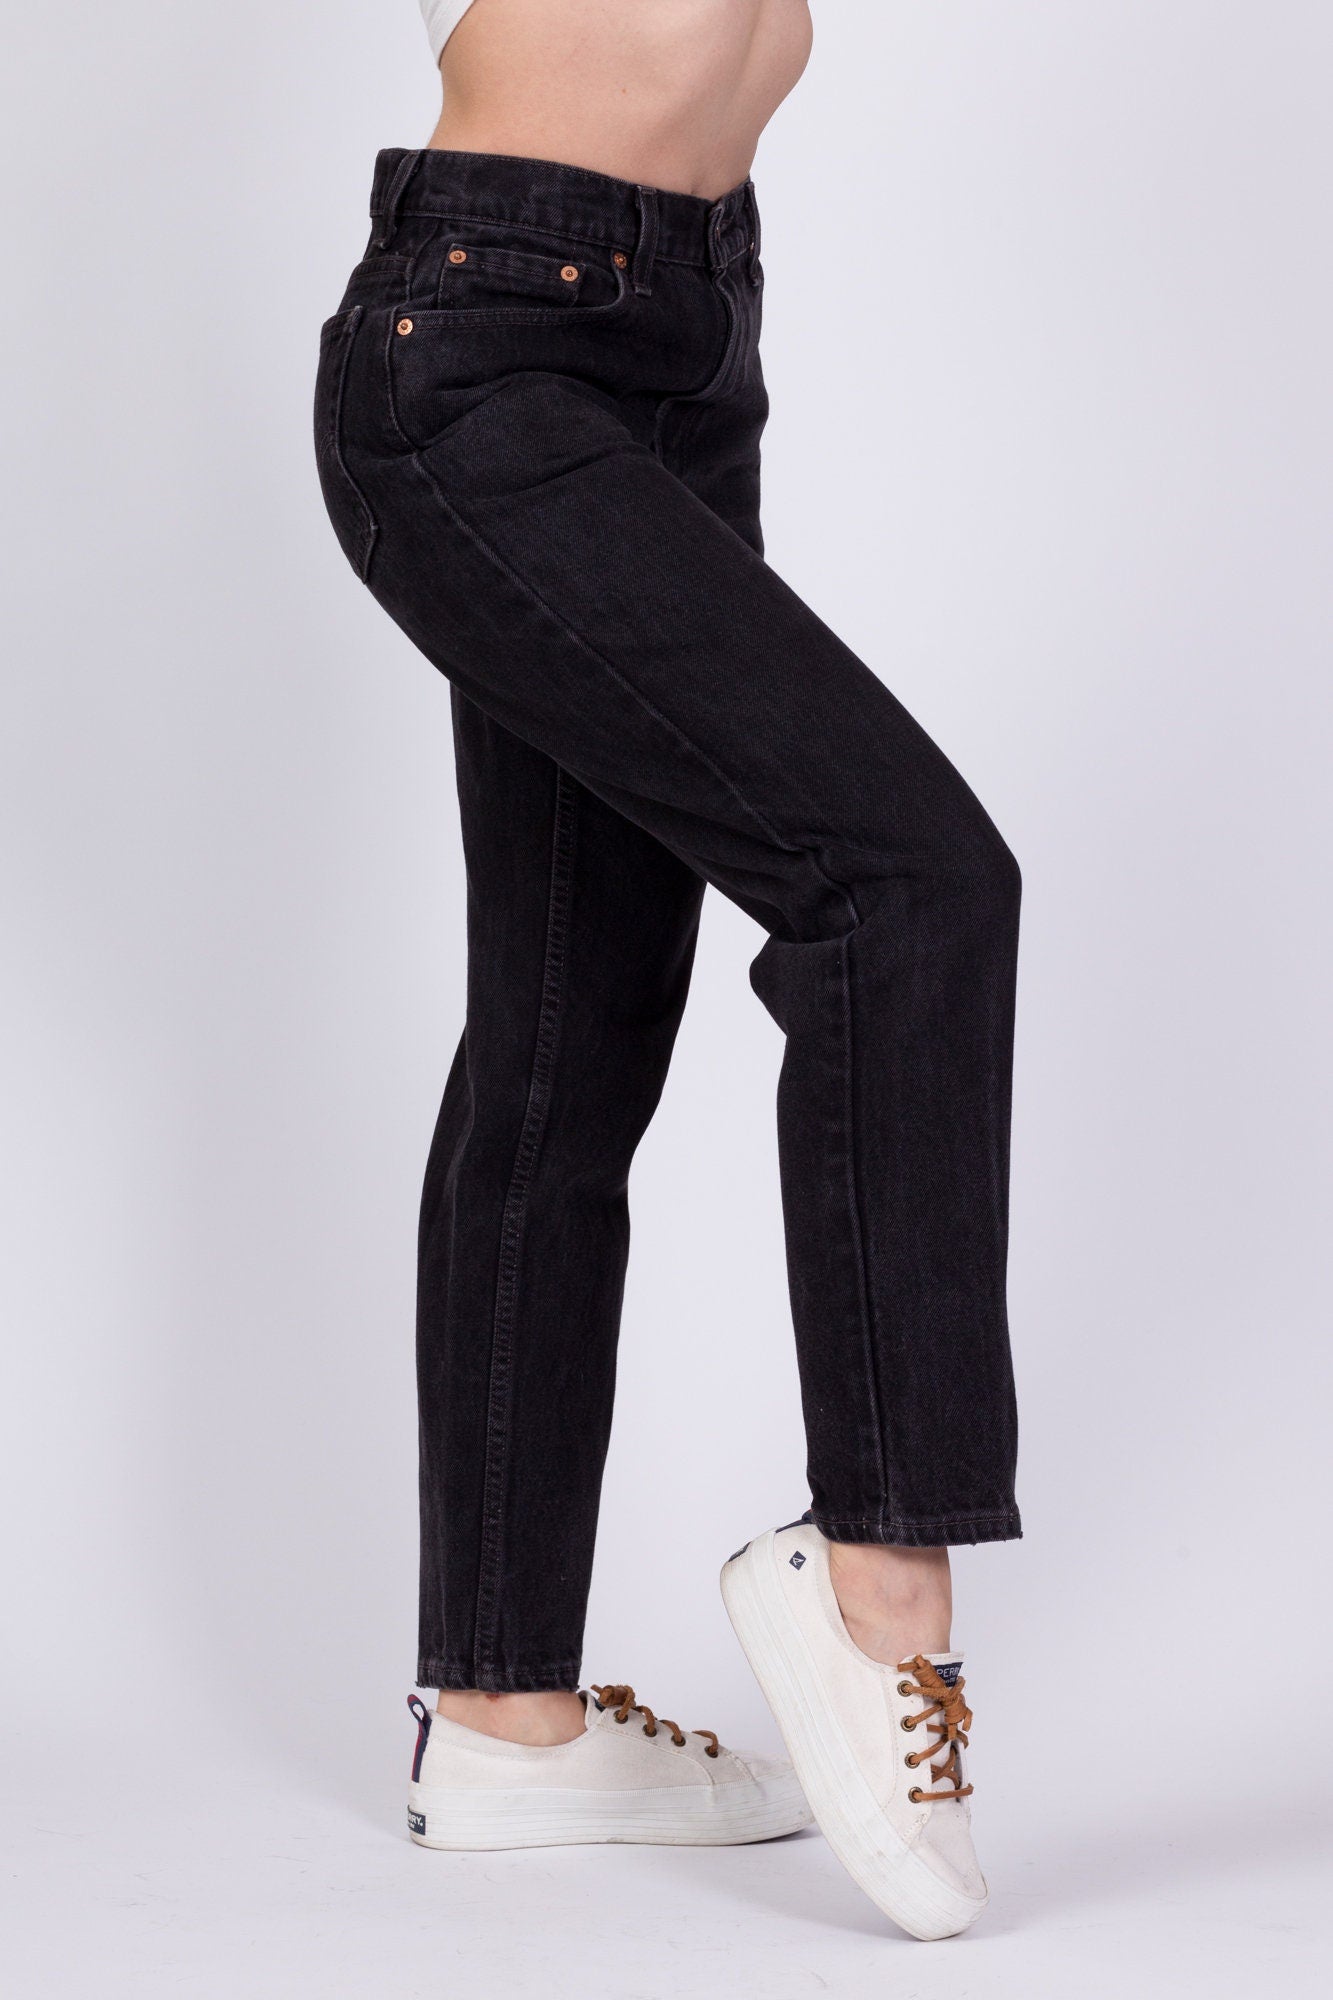 Vintage Levi's Black Mom Jeans - Small, 26" 